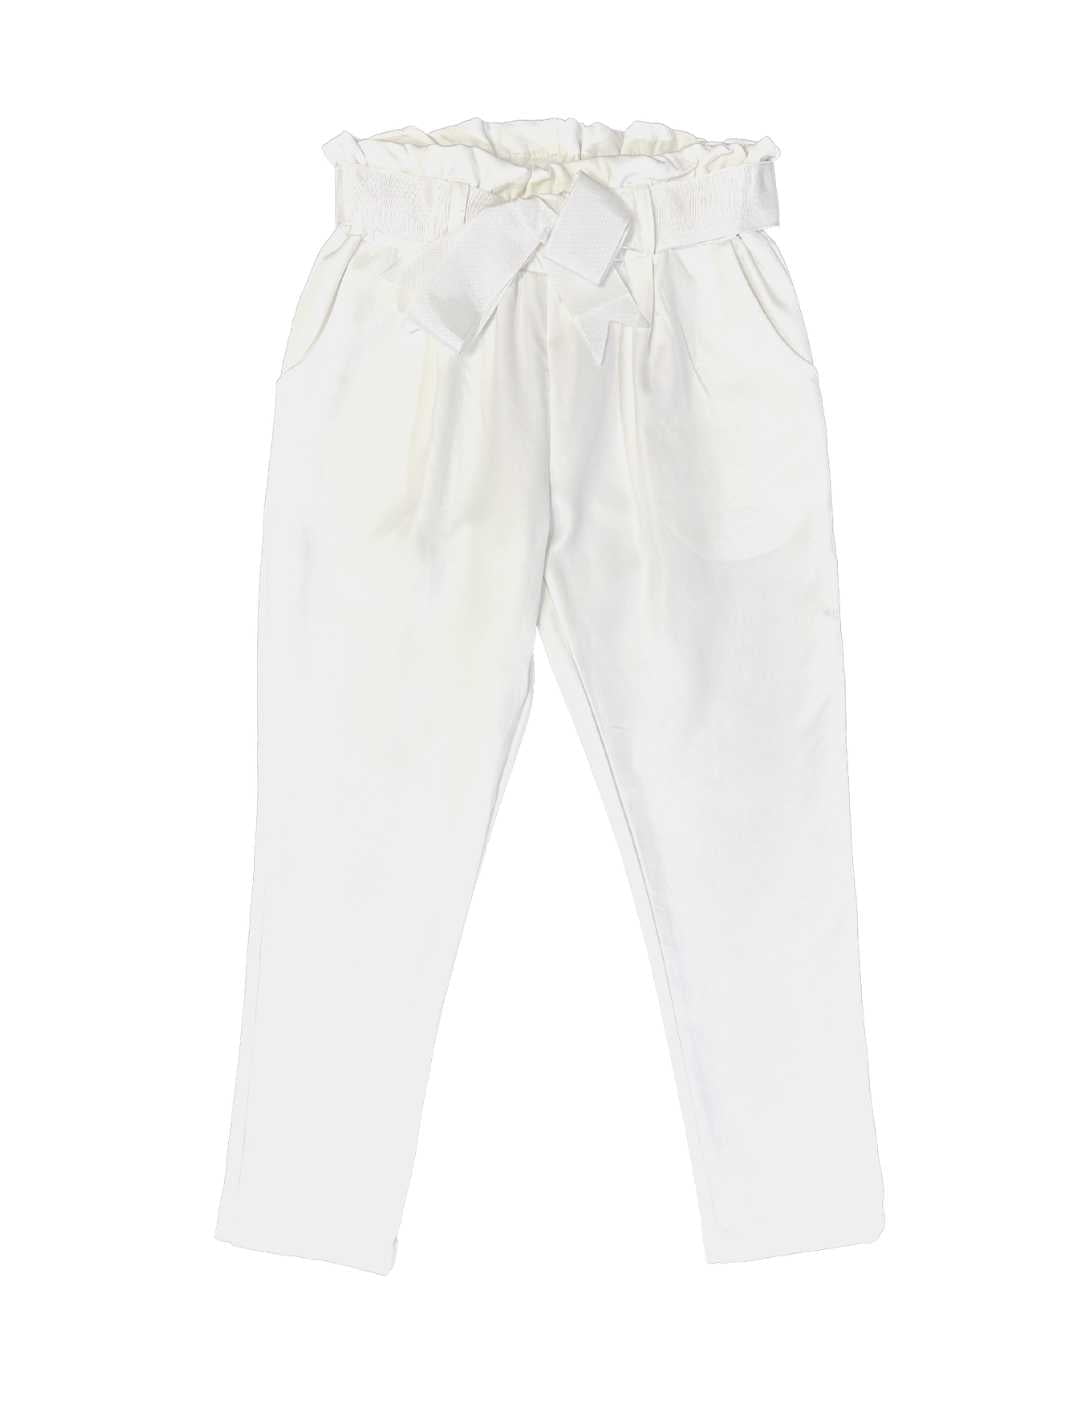 Girls' Straight Fit Uniform Pants - Cat & Jack™ : Target